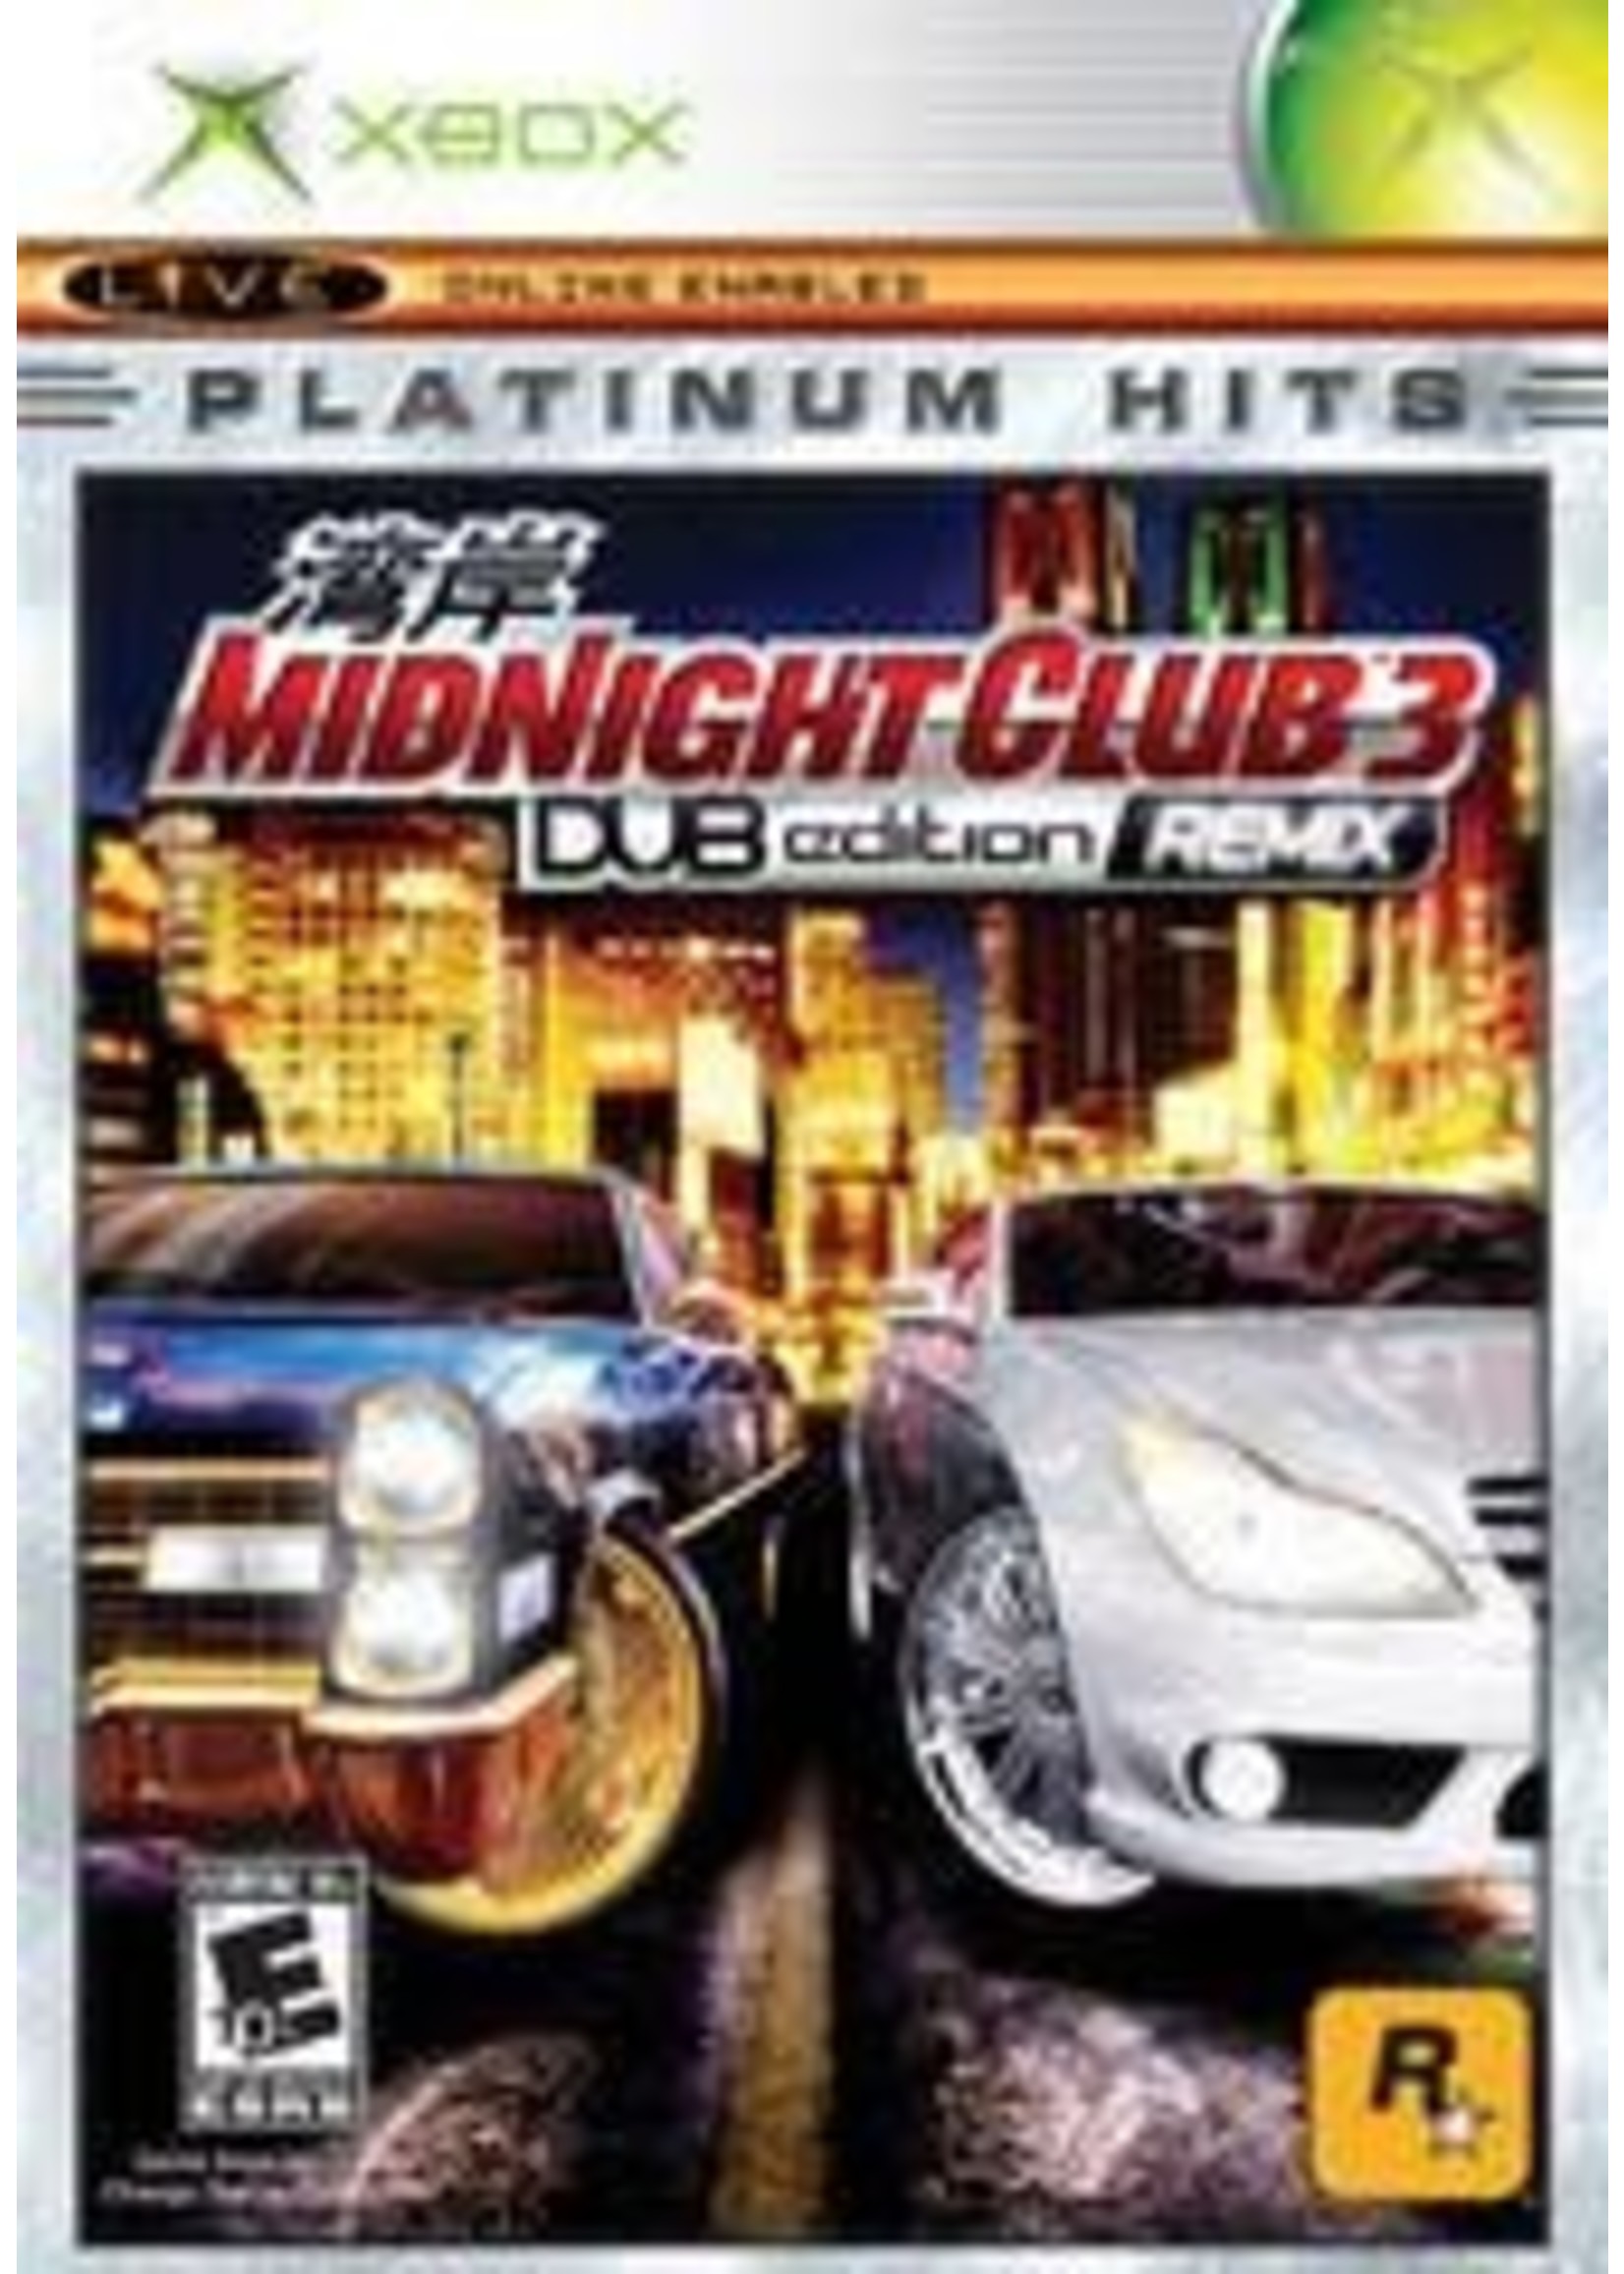 Midnight Club 3 Dub Edition Remix Xbox